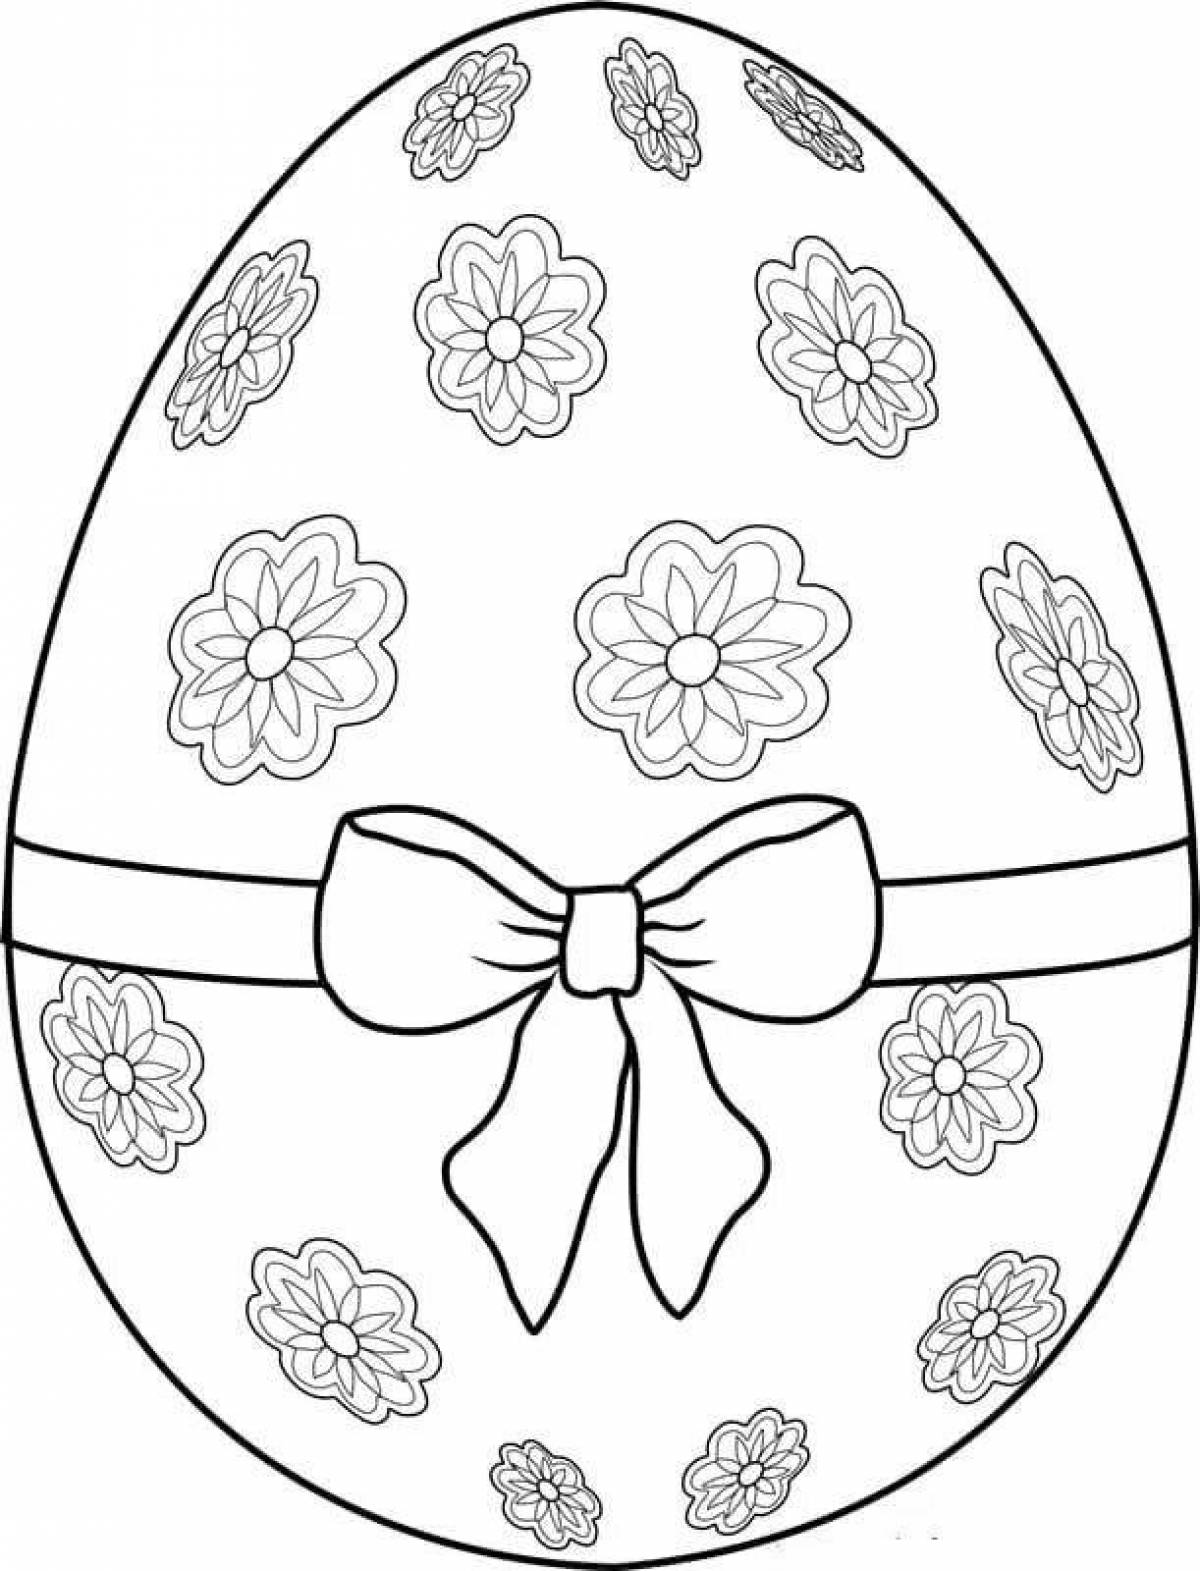 Яйцо шаблон для детей. Пасхальное яйцо раскраска. Раскраски пасочных яиц. Яйца на Пасху раскраска. Пасхальное яйцо раскраска для детей.